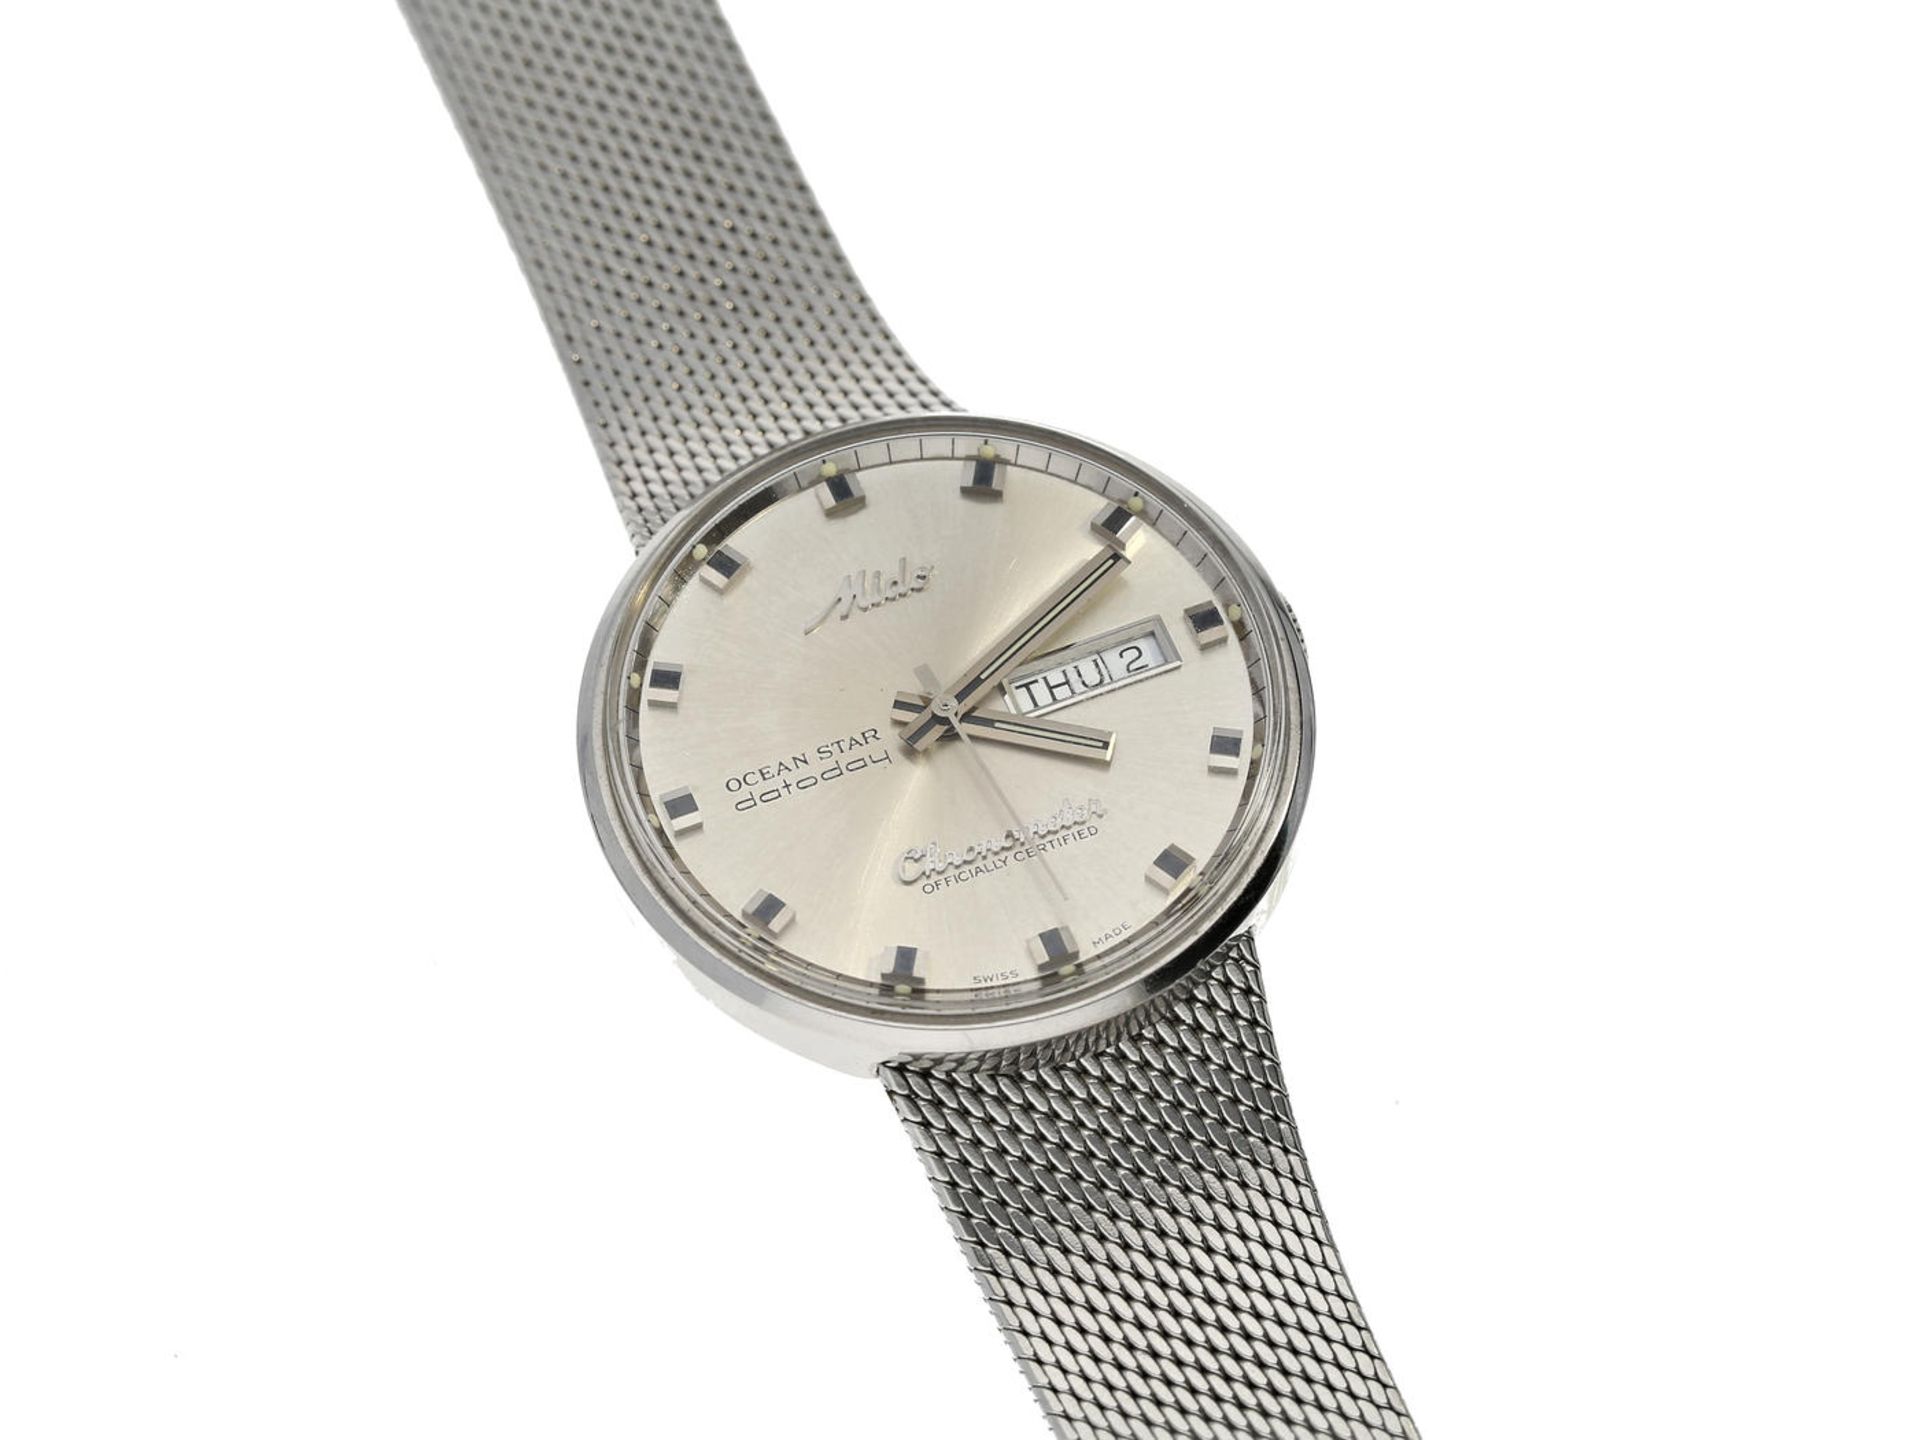 Armbanduhr: Mido Ocean Star Automatic-Chronometer "Datoday" Ca. Ø37mm, Edelstahl, wasserdichtes